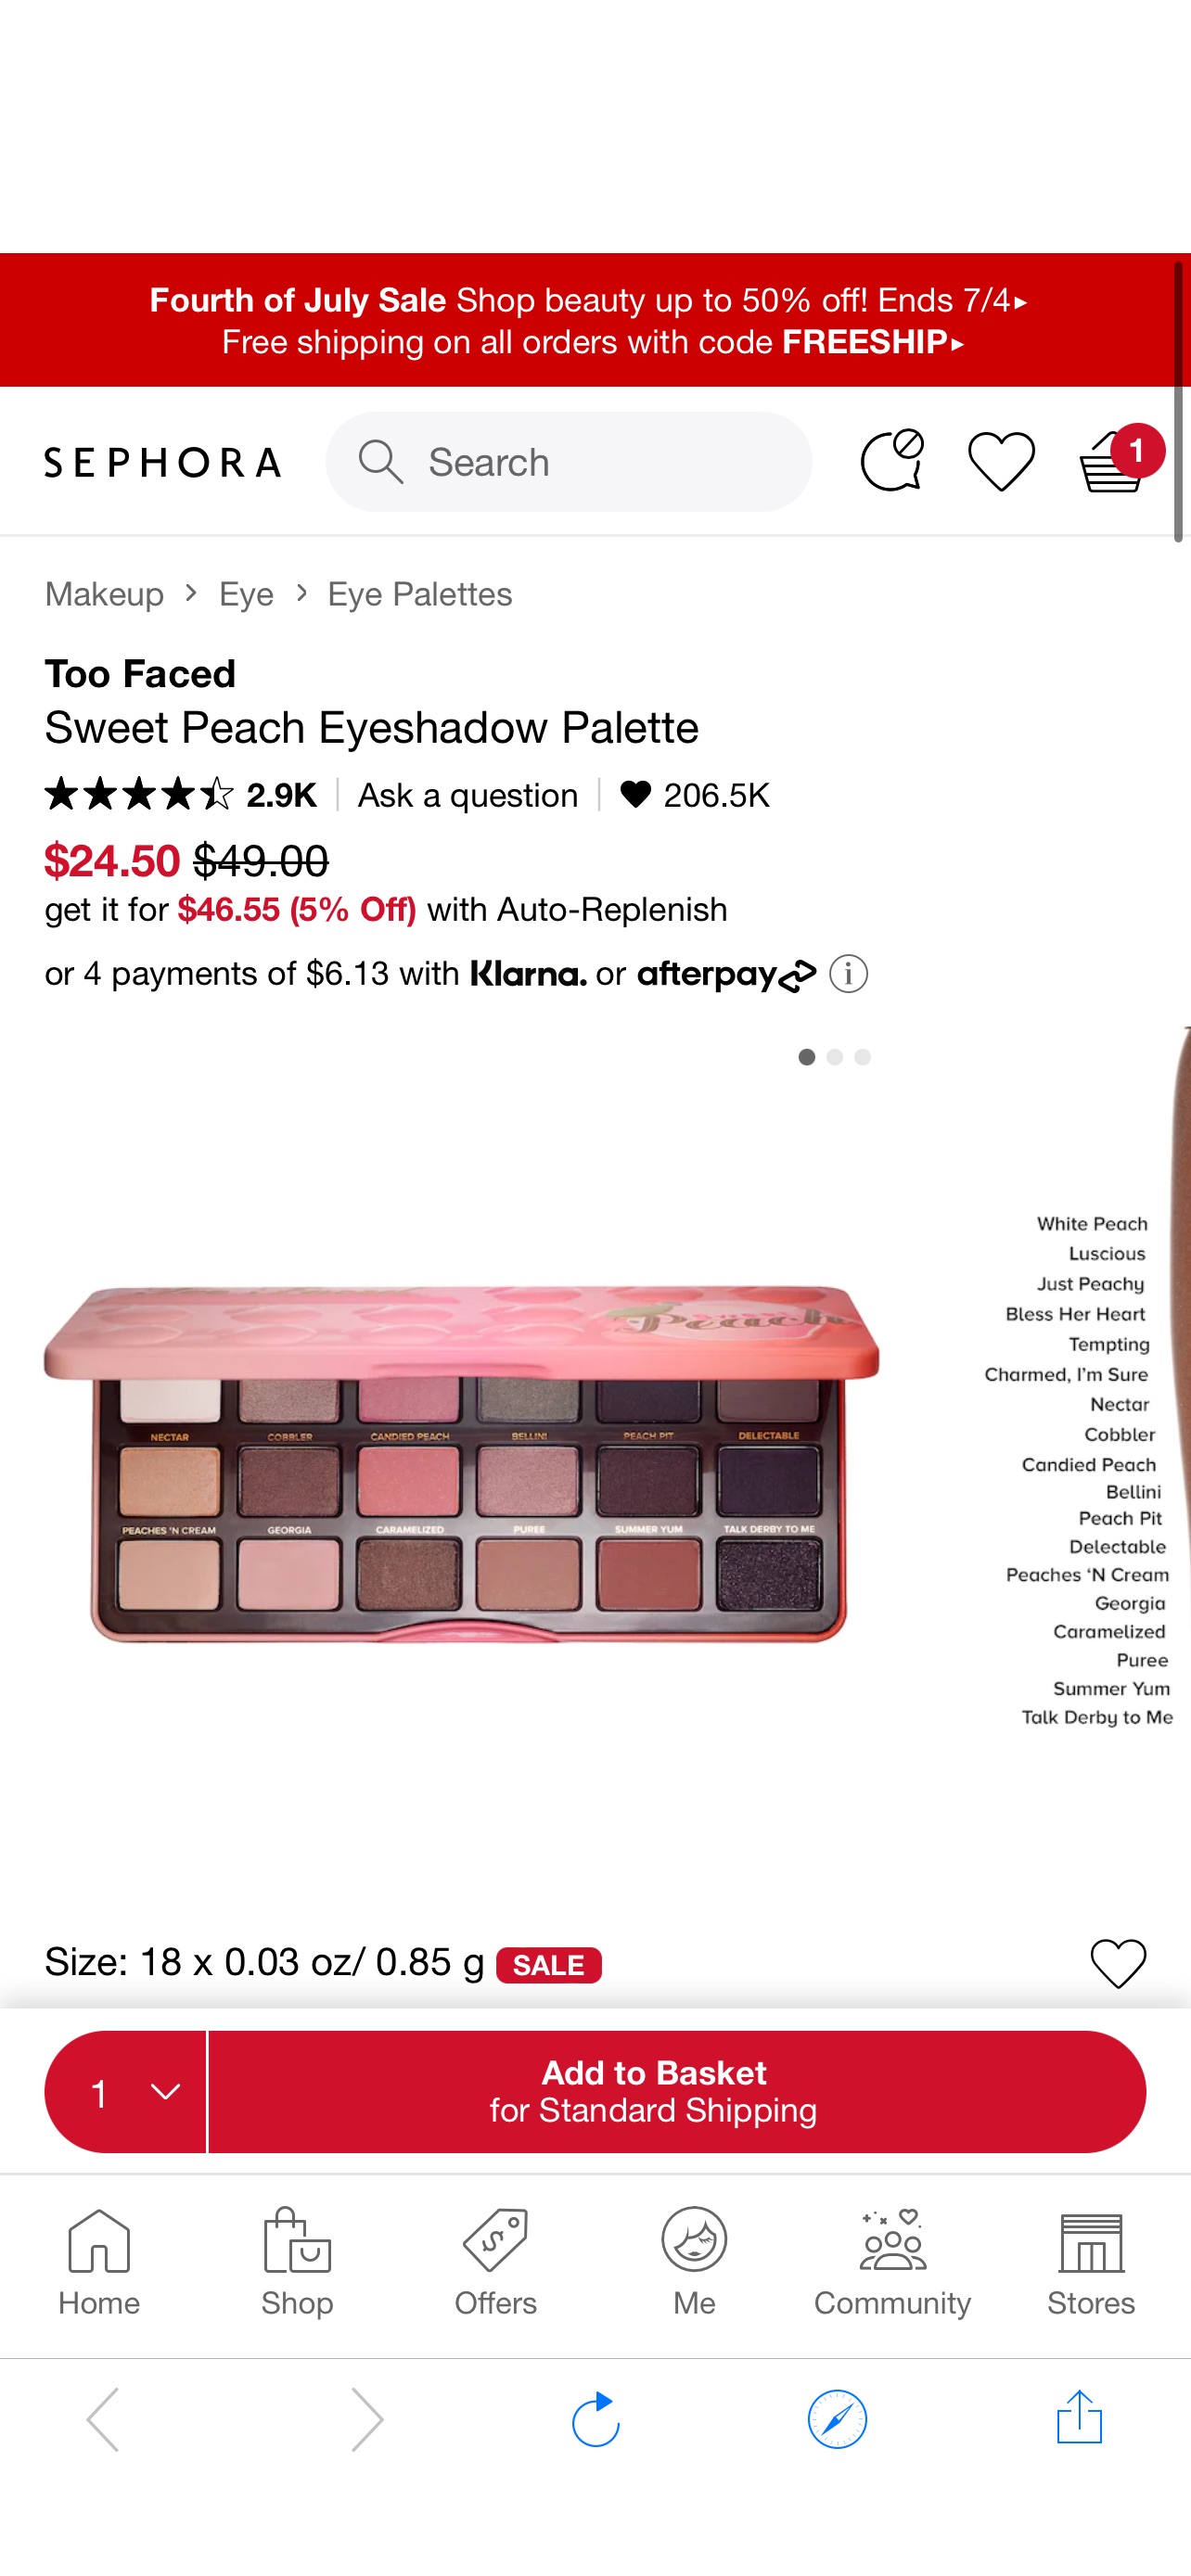 Sweet Peach Eyeshadow Palette - Too Faced蜜桃盘半价 | Sephora